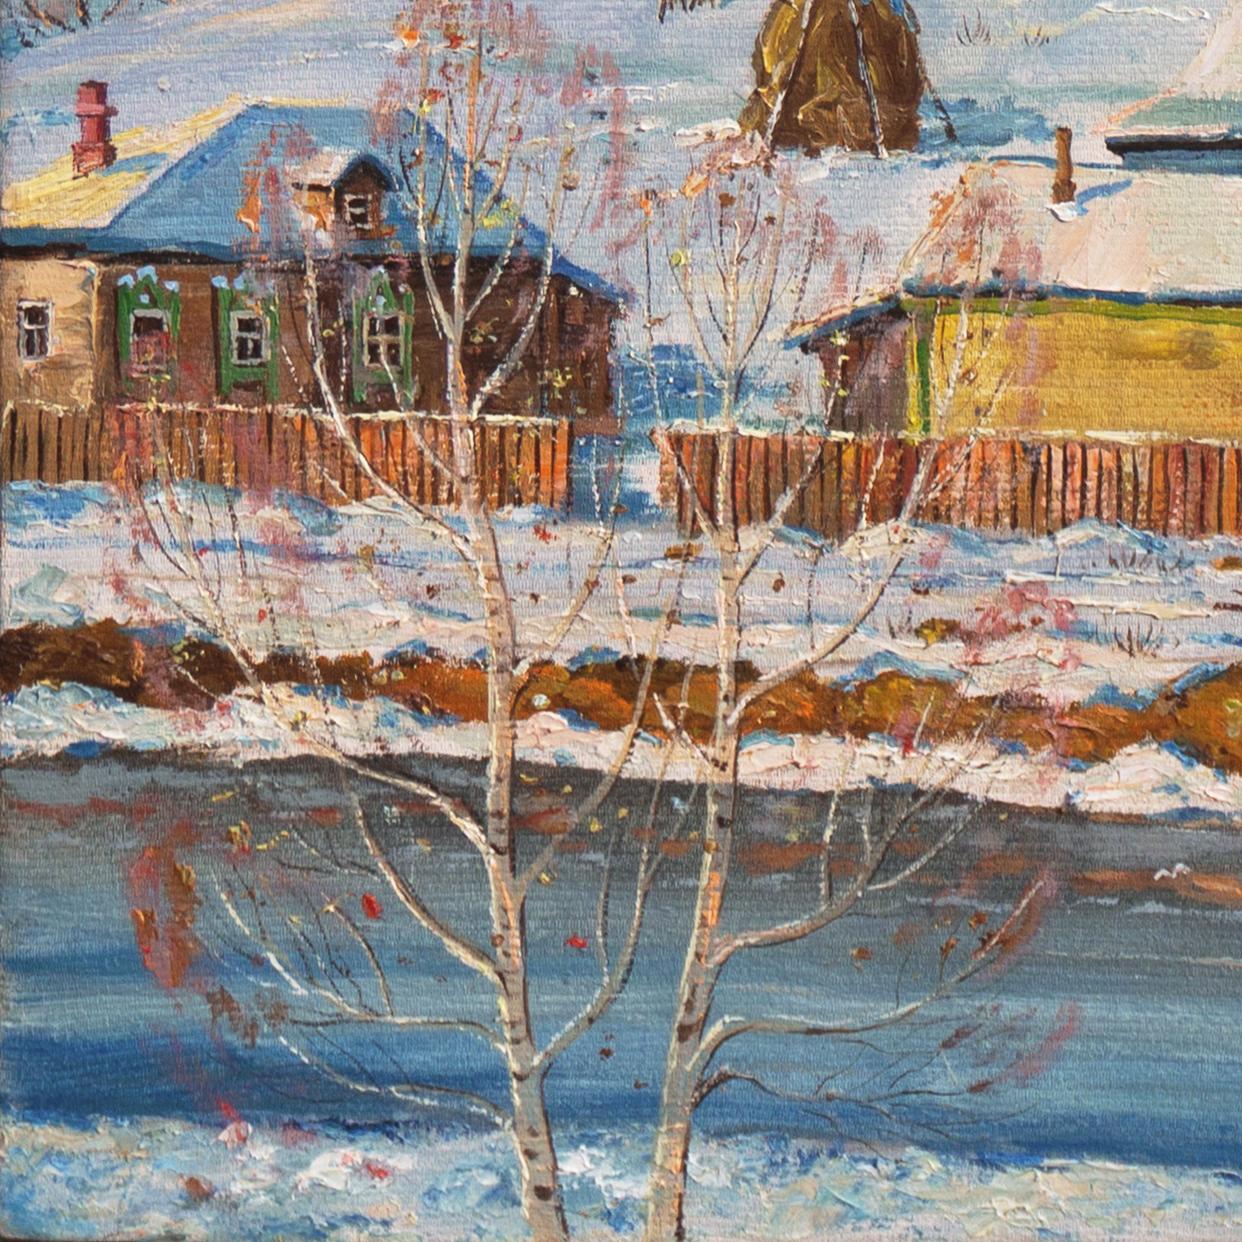 'Winter Village outside Moscow', Art and Graphics School, Lytkarinsky Museum  - Painting by Viktor Nikolaevich Koryshev